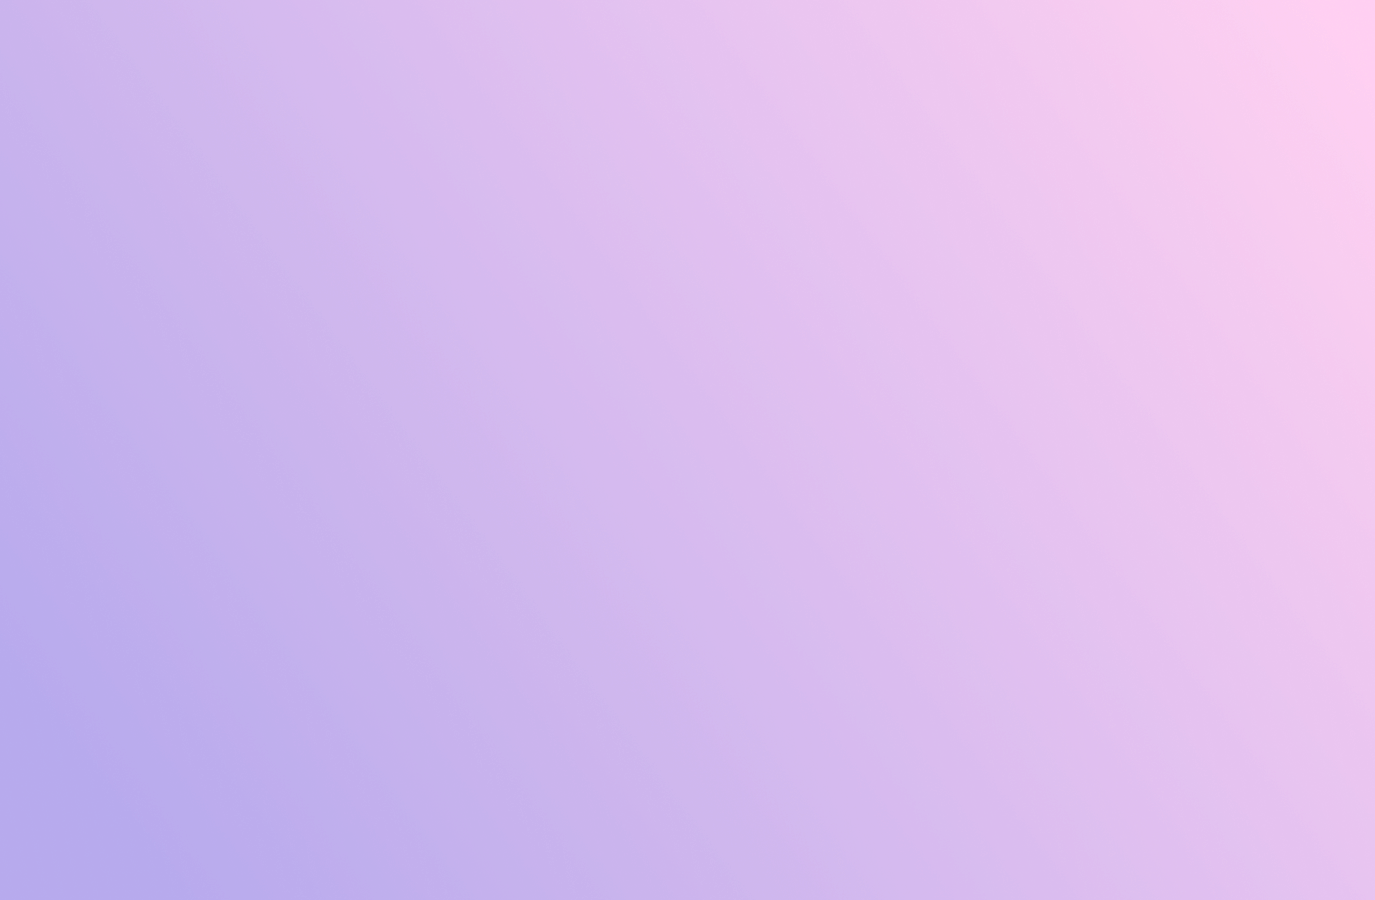 Light Purple to Pink Gradient Background